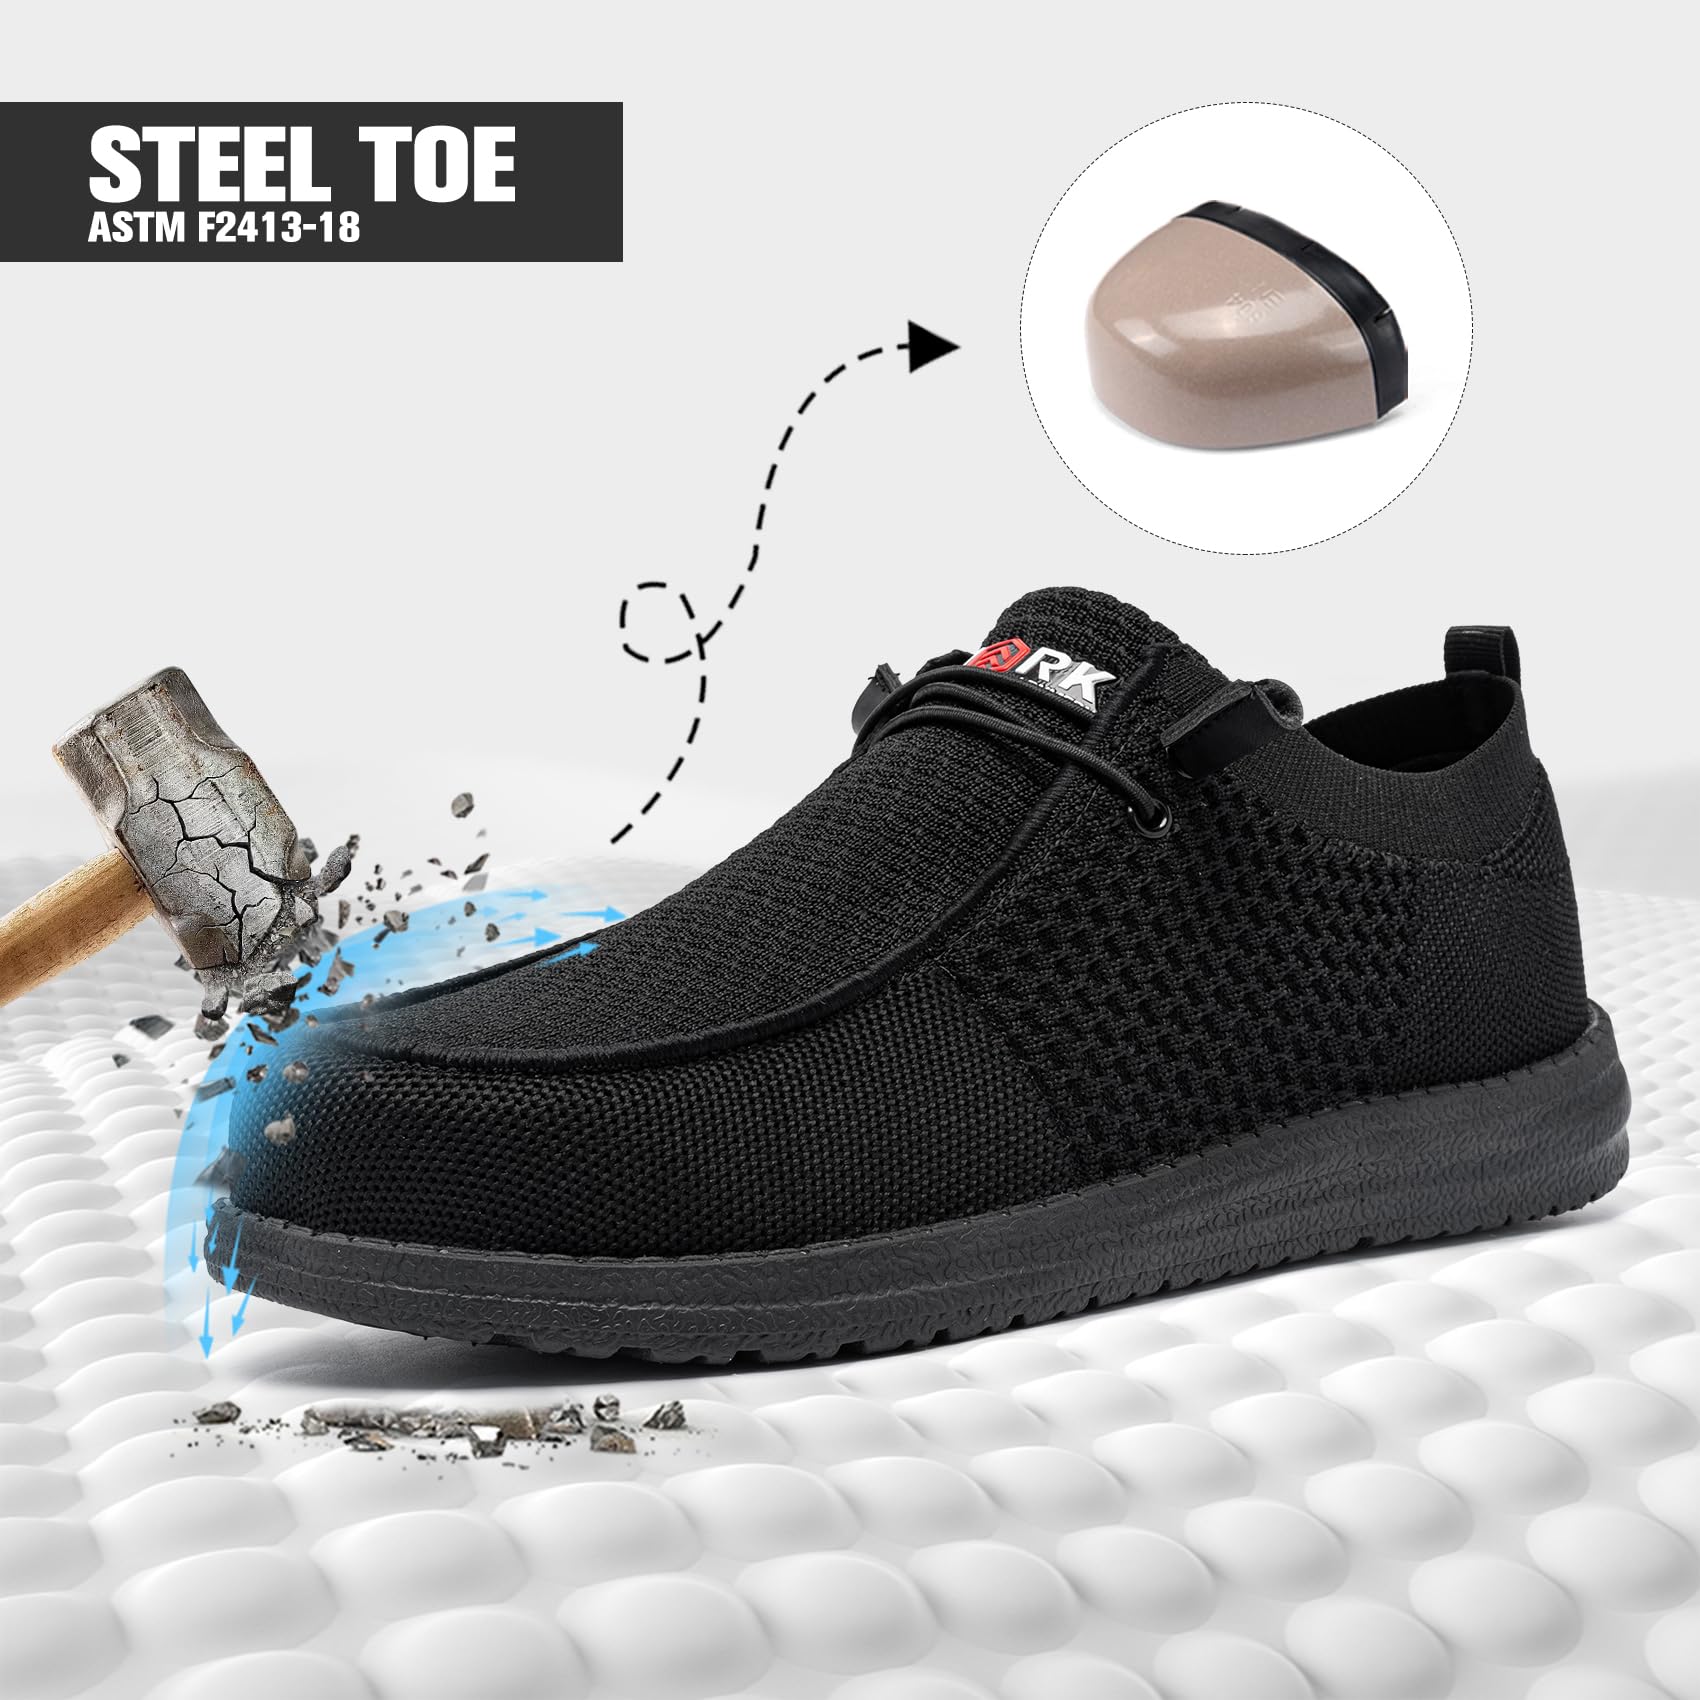 LARNMERN Slip On Steel Toe Shoes Men Lightweight Comfortable Lounging Walking Sneakers Steel Toe Loafers